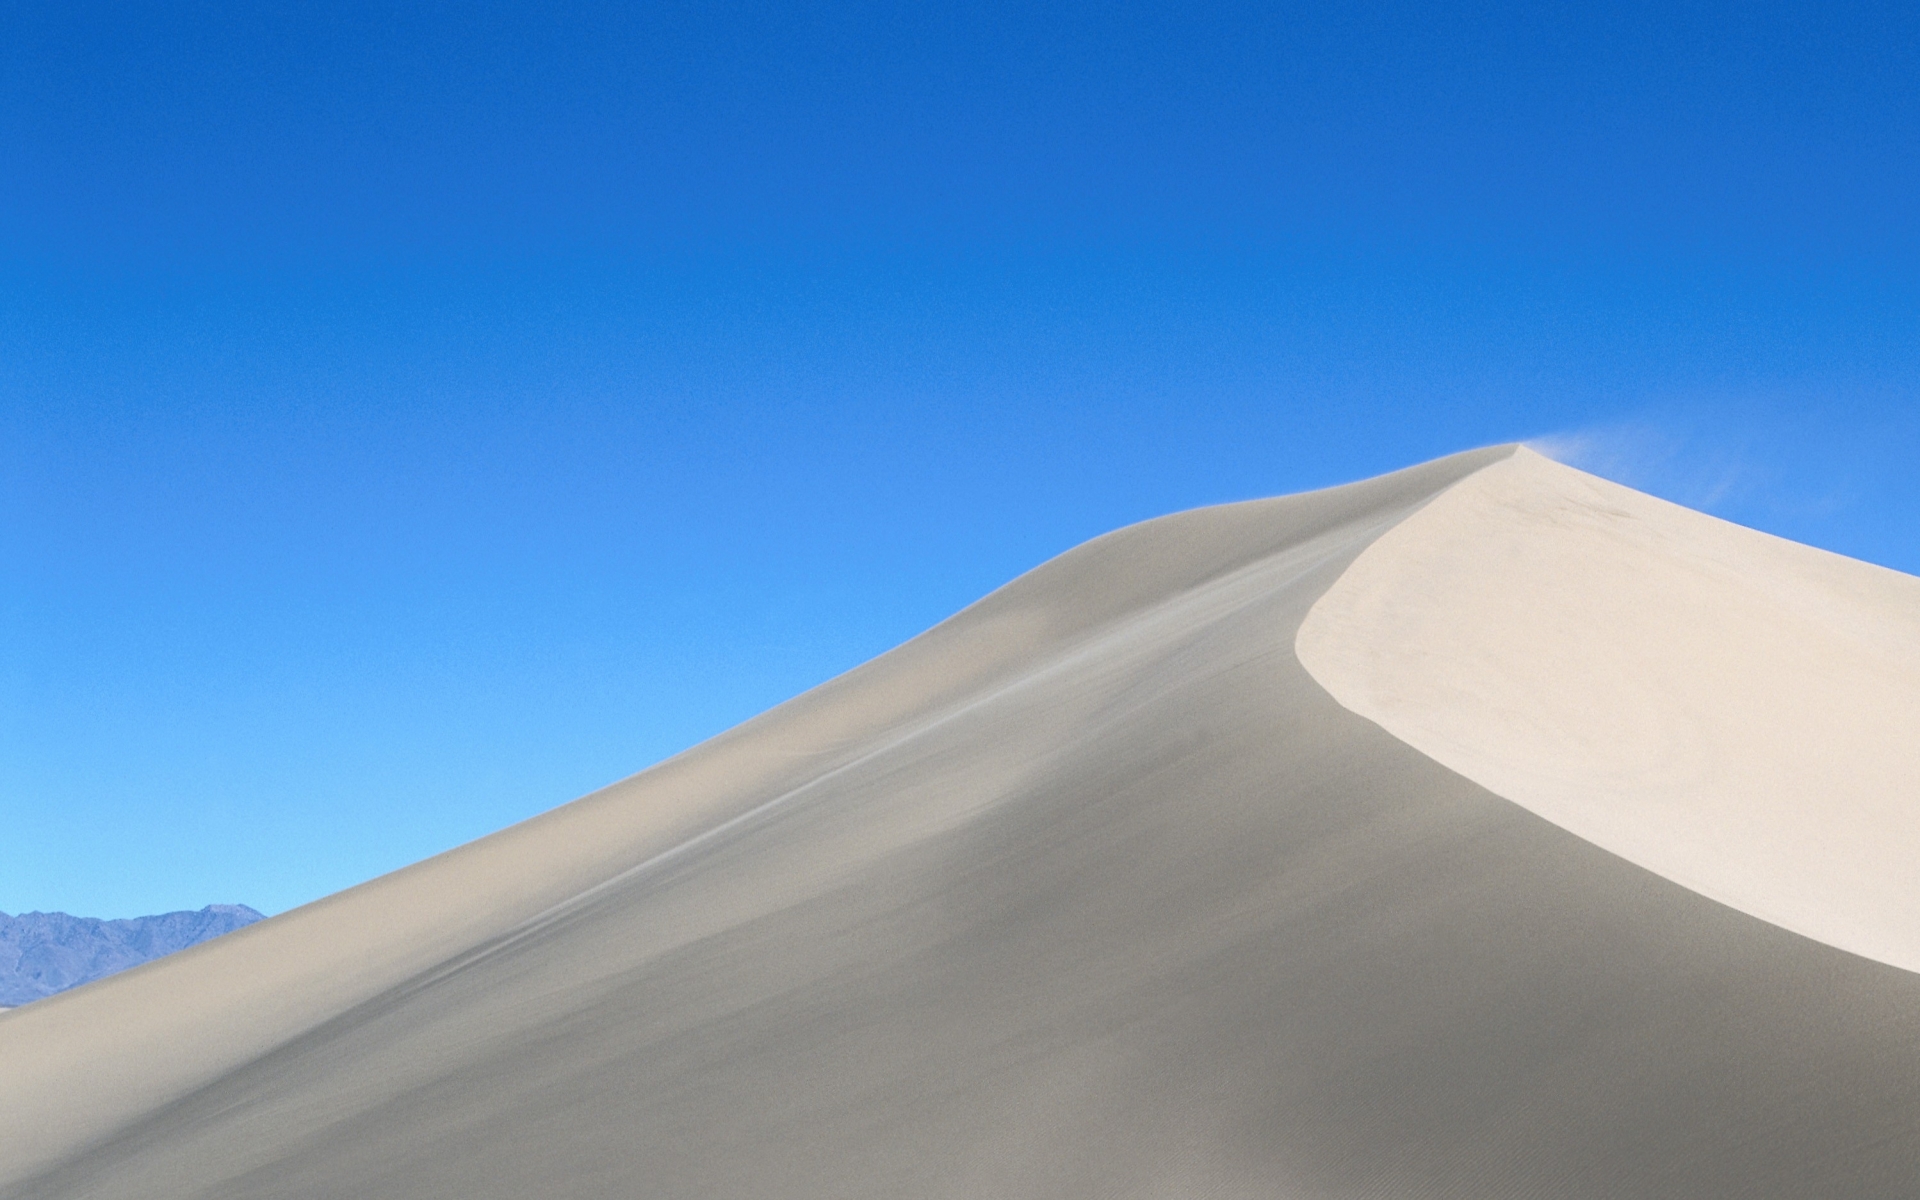 immagini di sfondi bianchi,sabbia,blu,bianca,cielo,duna